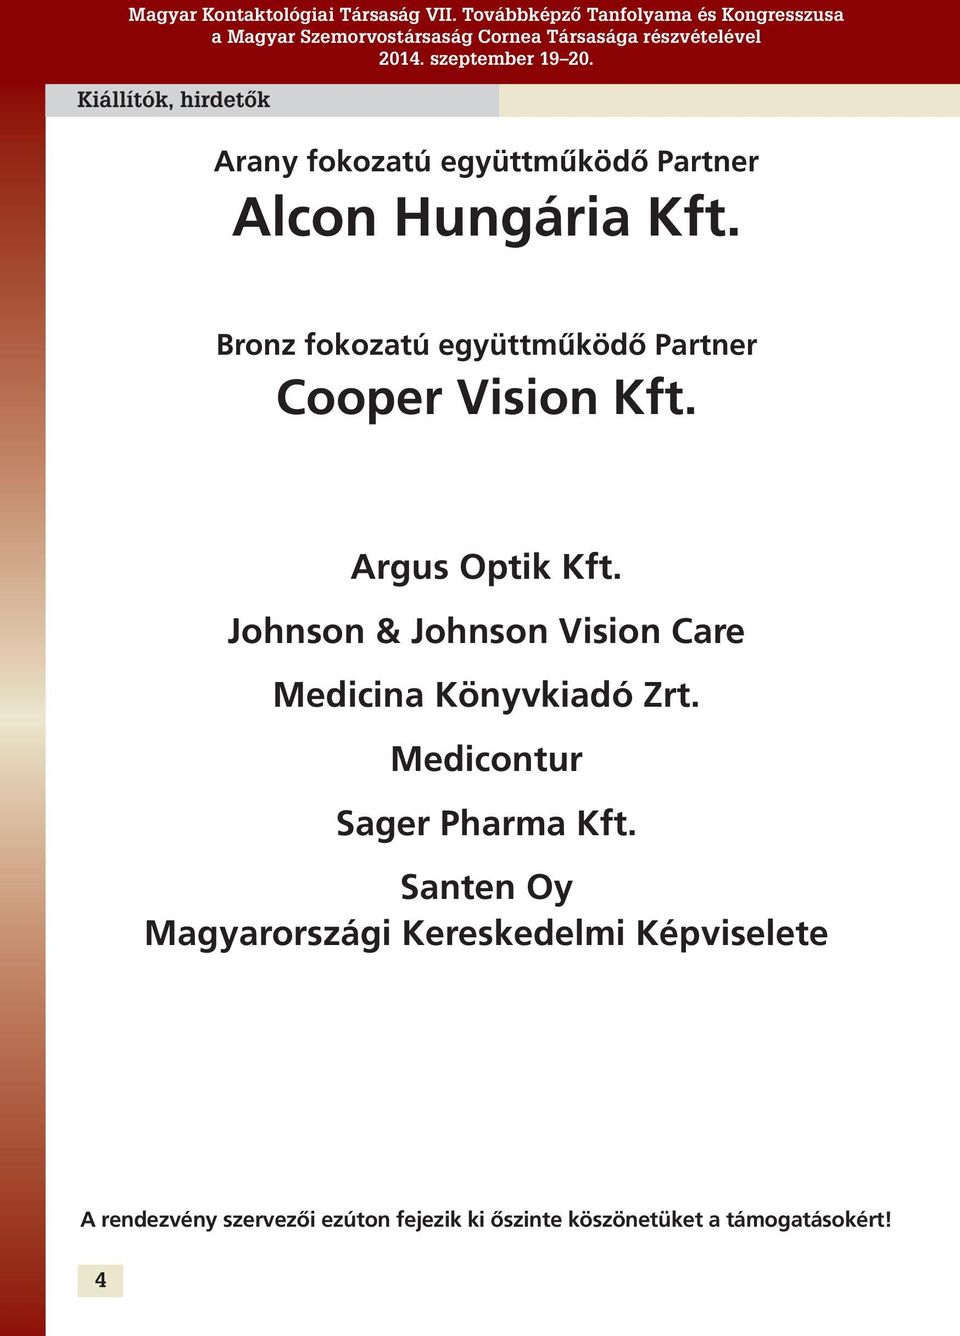 Johnson & Johnson Vision Care Medicina Könyvkiadó Zrt. Medicontur Sager Pharma Kft.